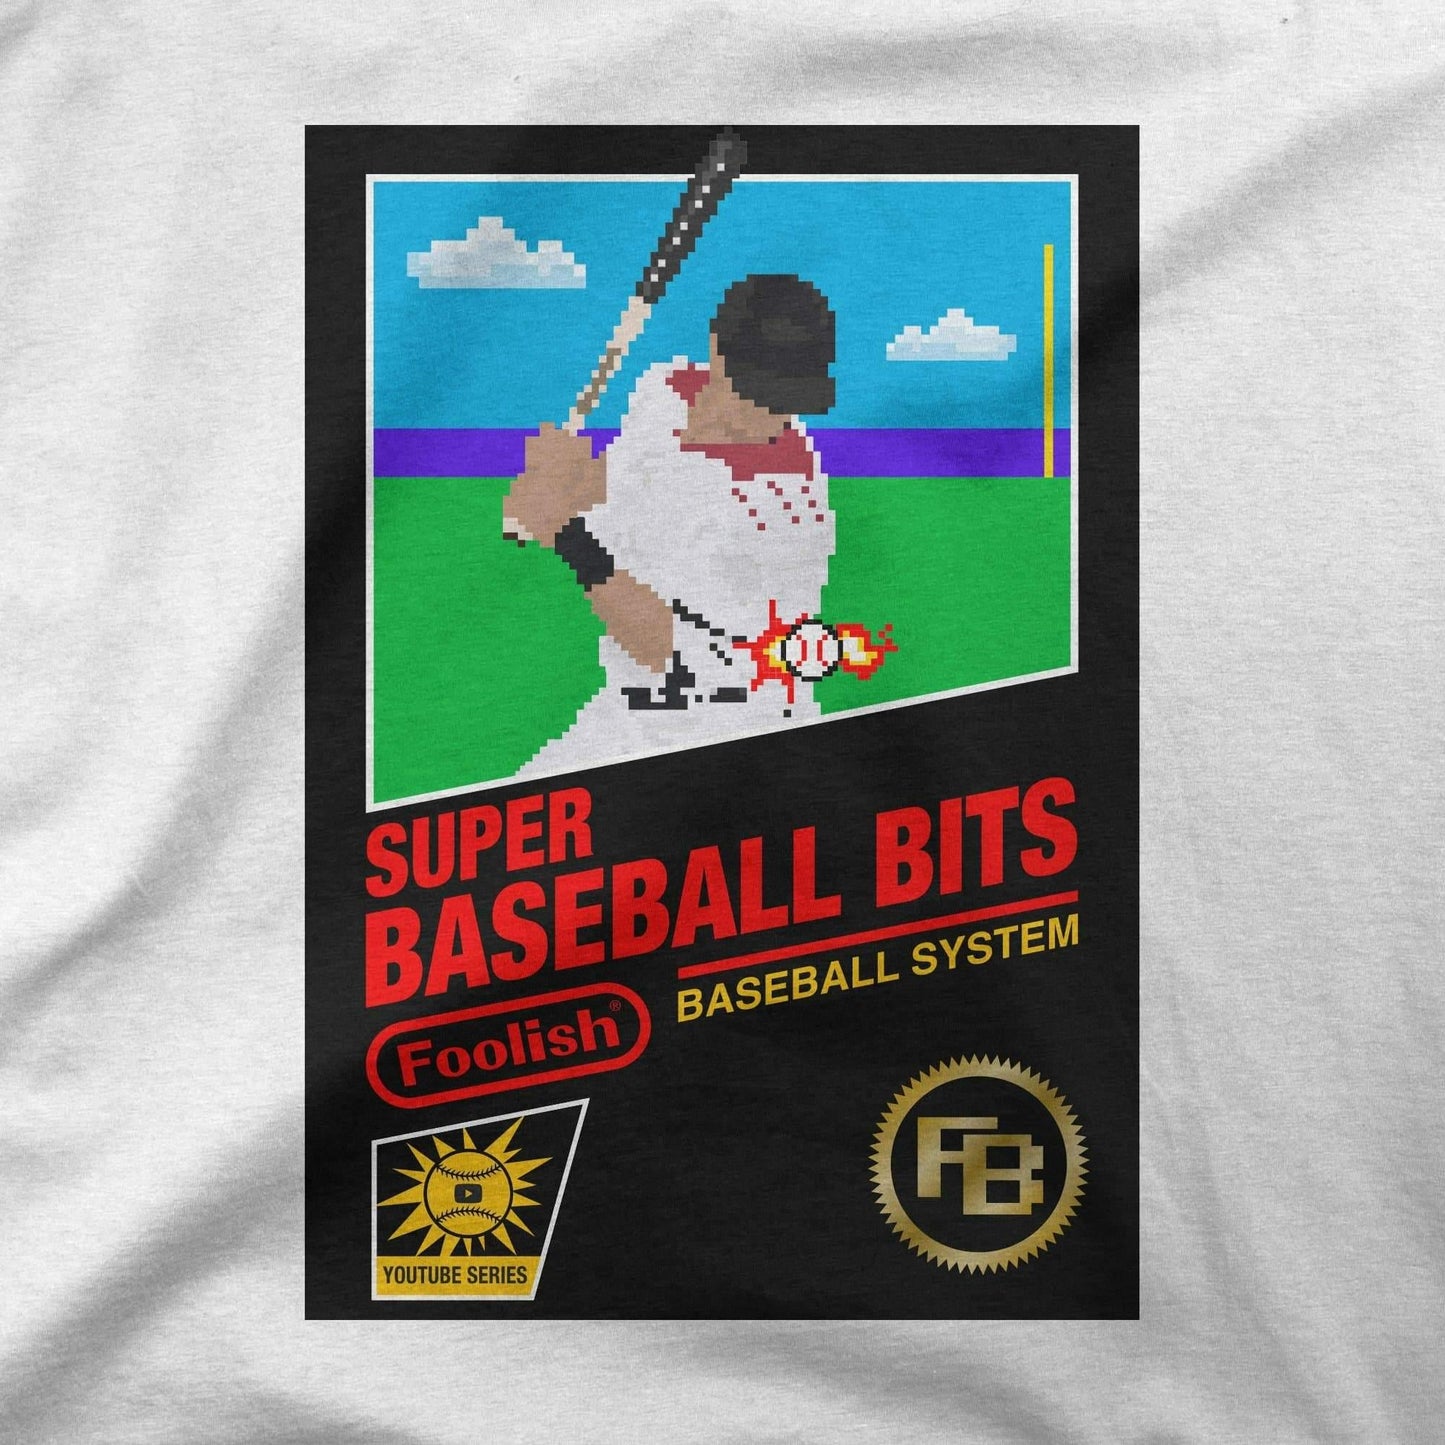 Super Baseball Bits | T-Shirt - Jomboy Media